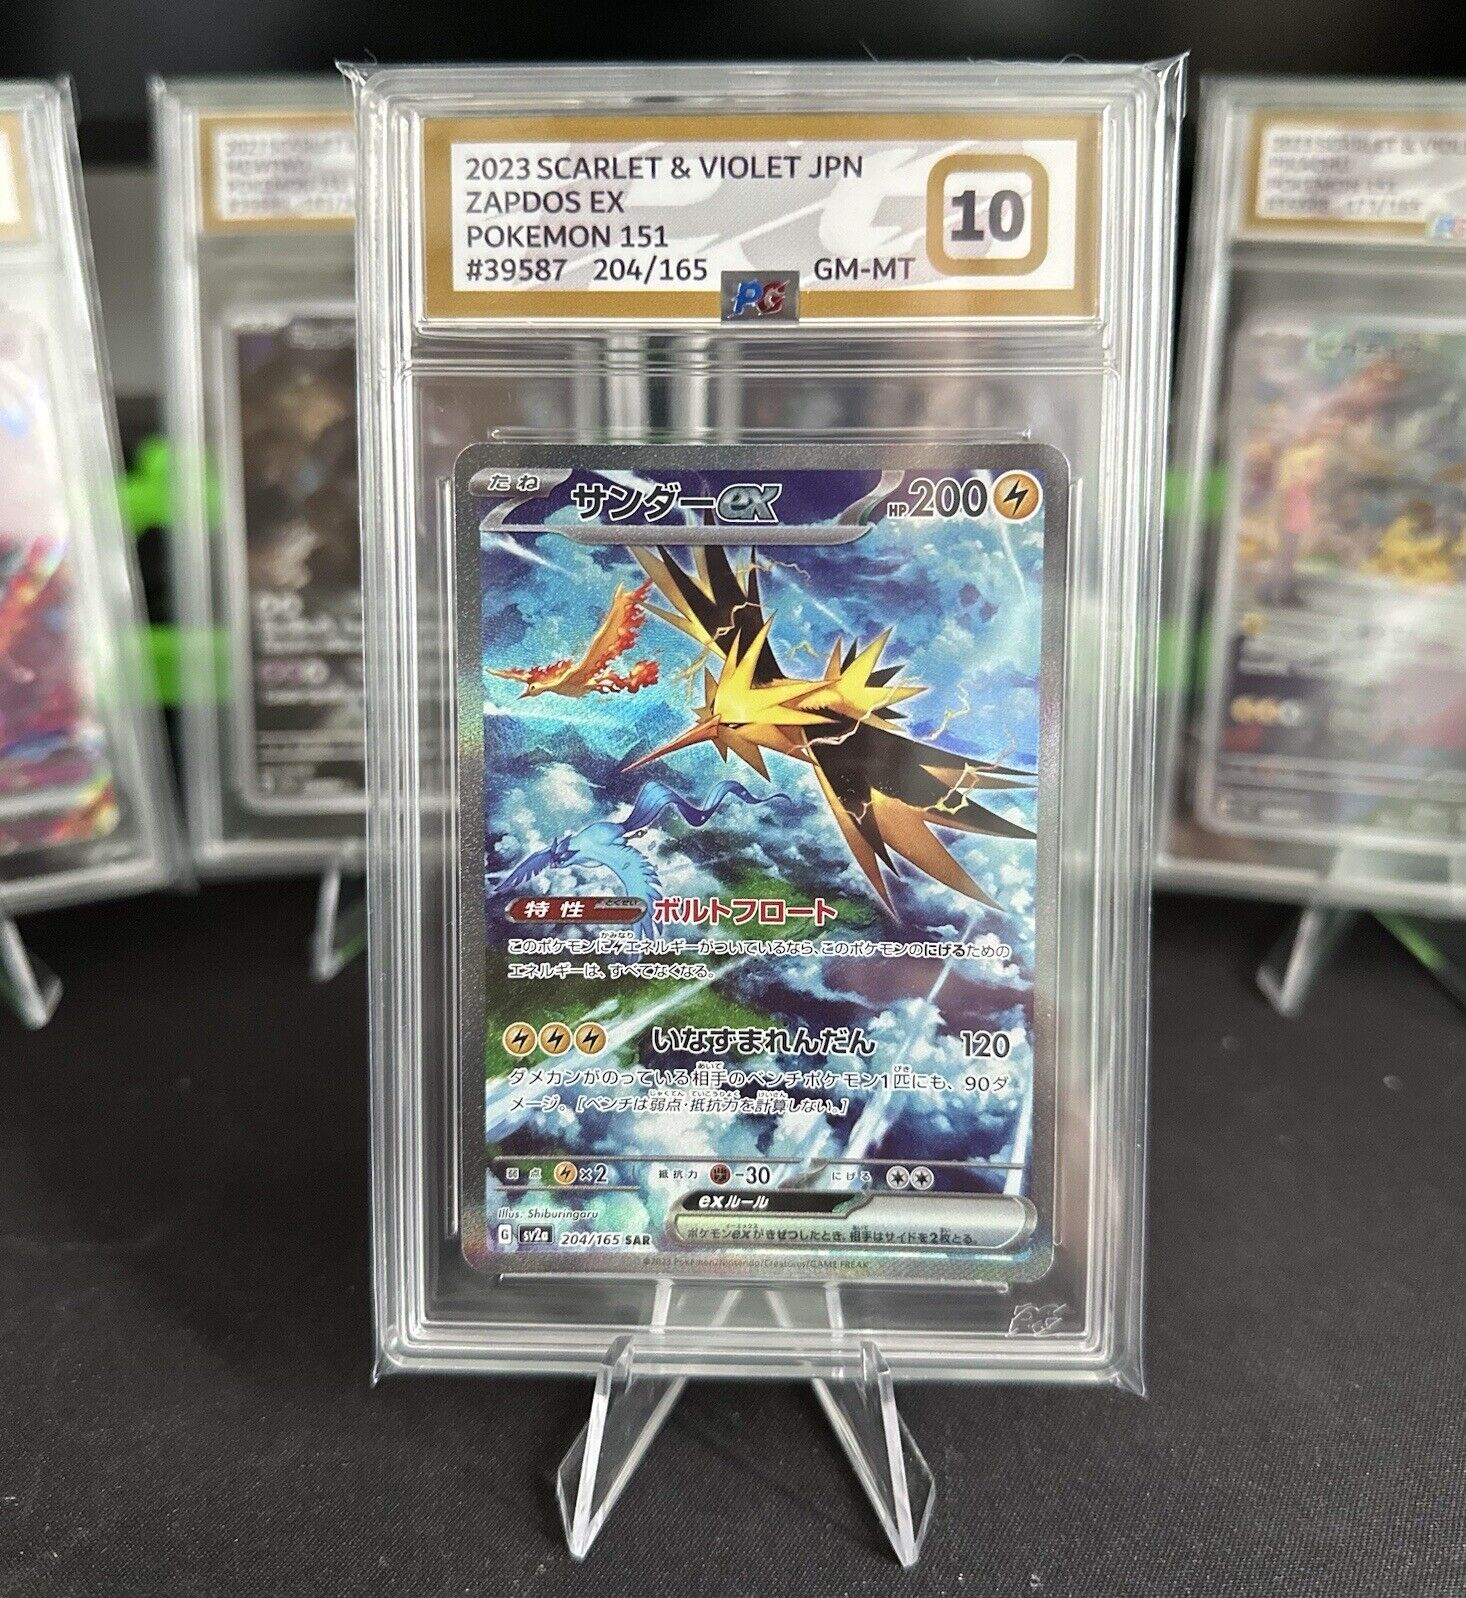 PG 10 Zapdos ex 204/165 Special Art Rare Pokemon Card 151 Japanese GEM MINT